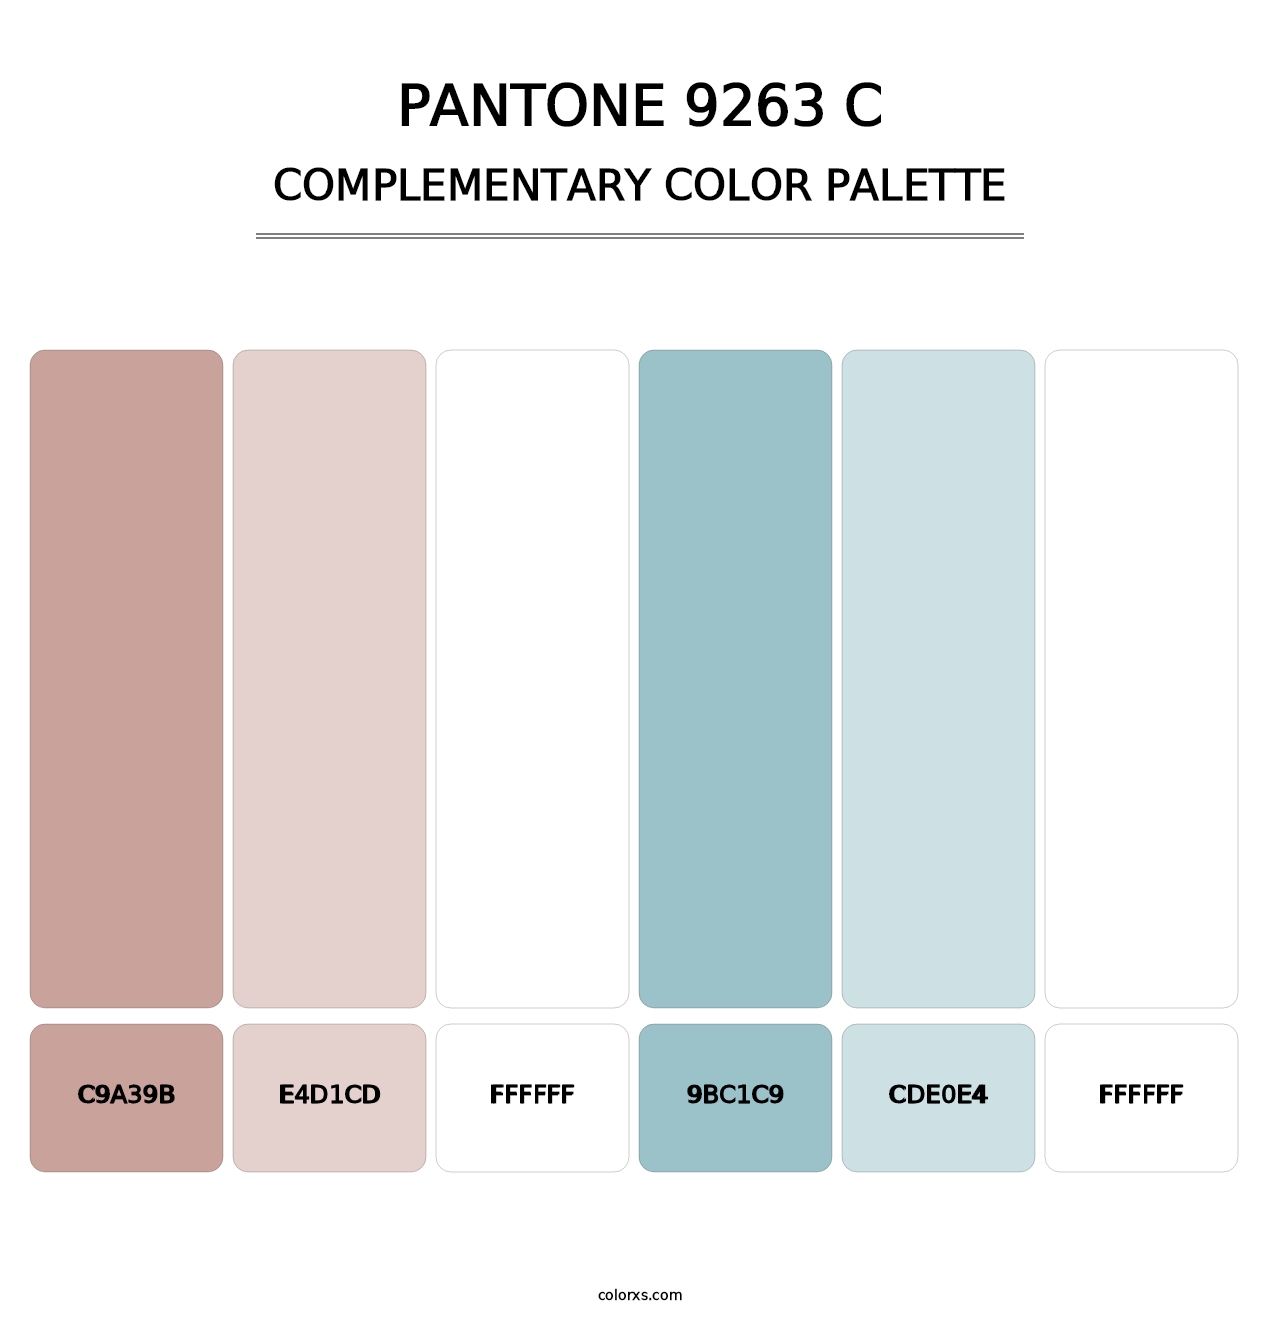 PANTONE 9263 C - Complementary Color Palette